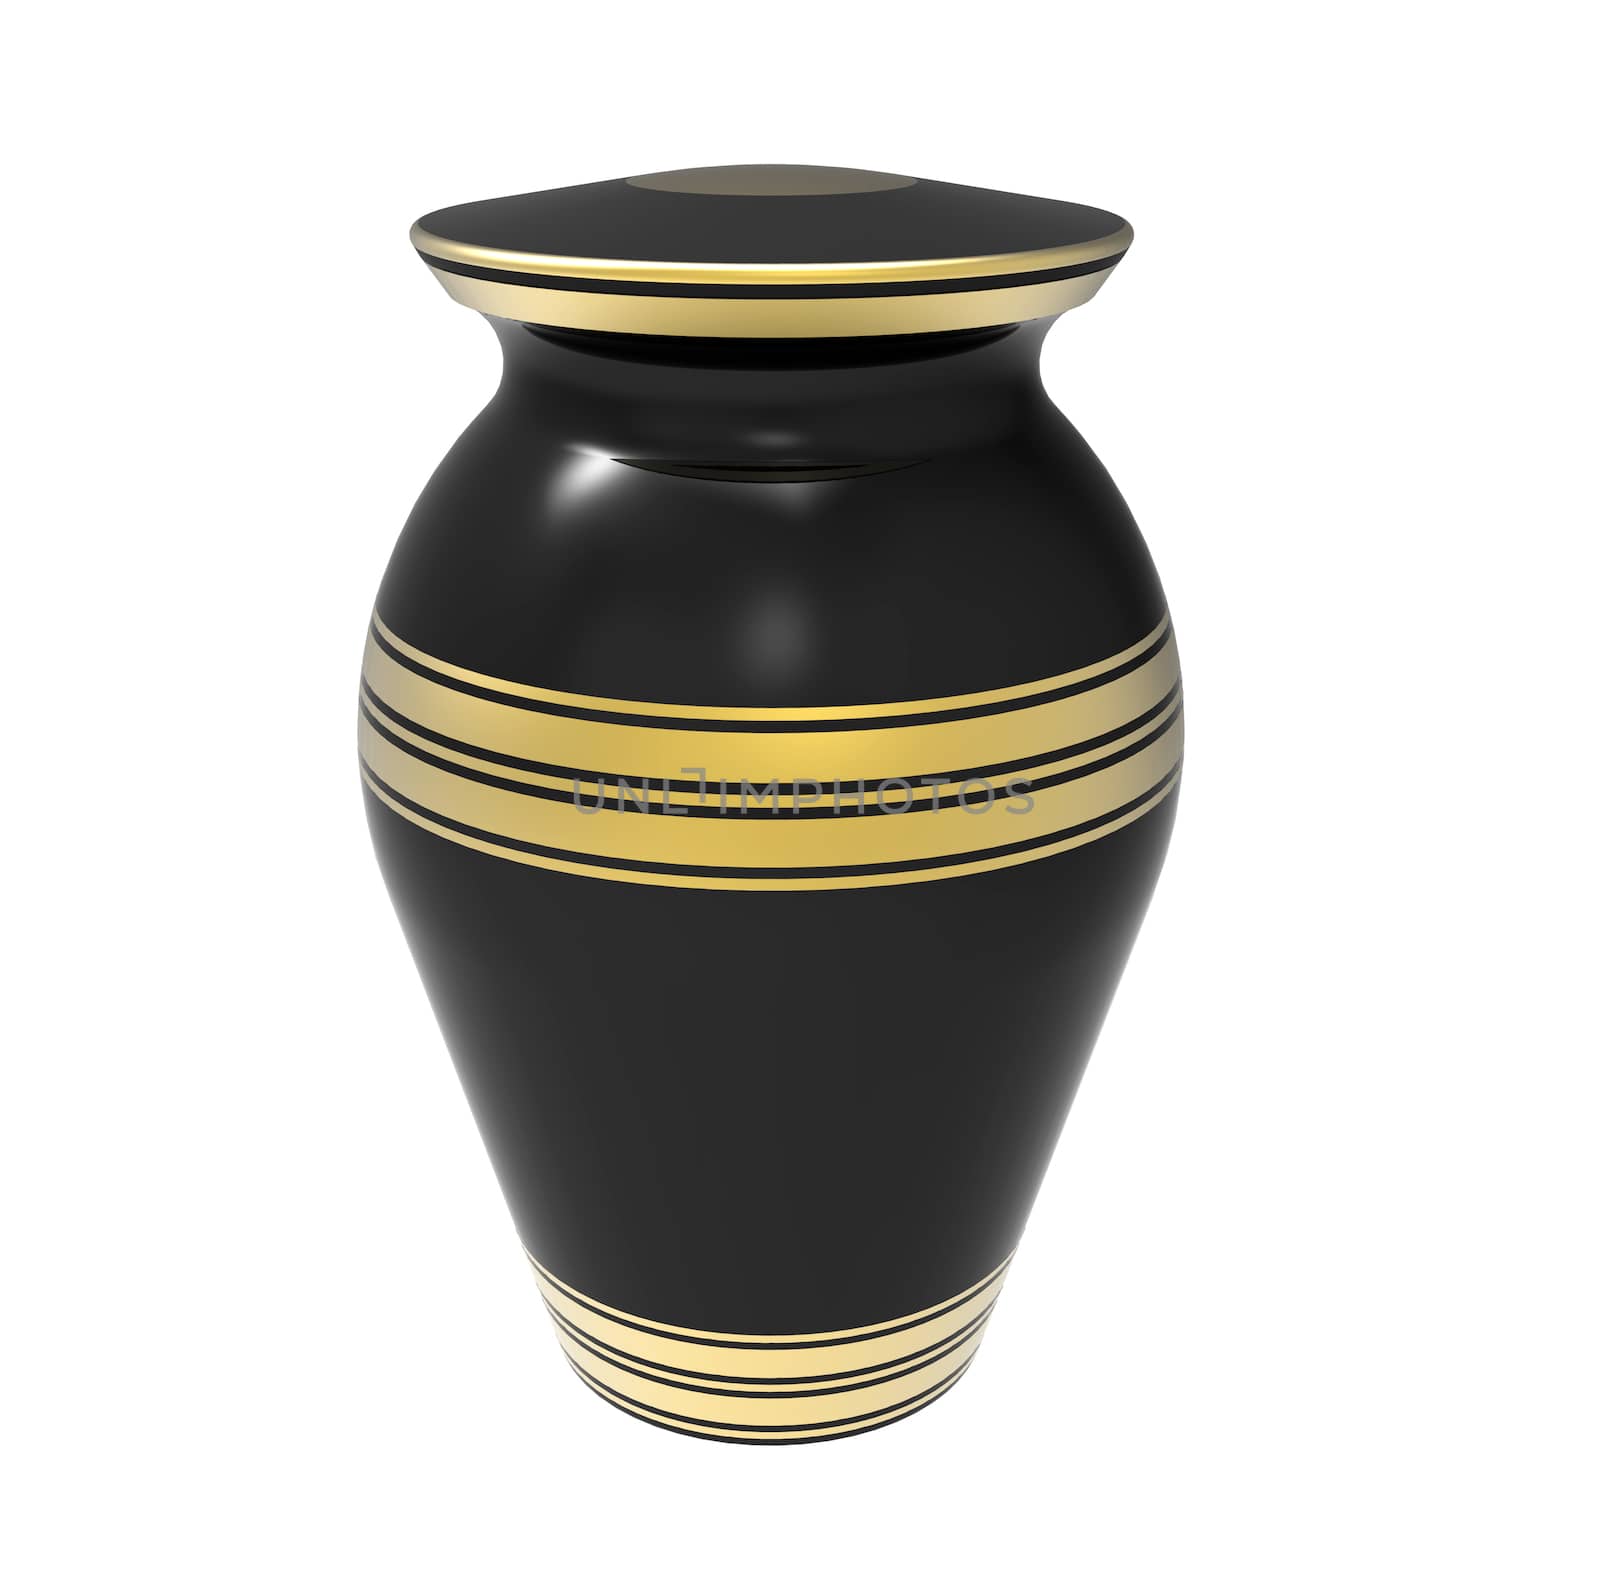 Cremation urn by Boris15